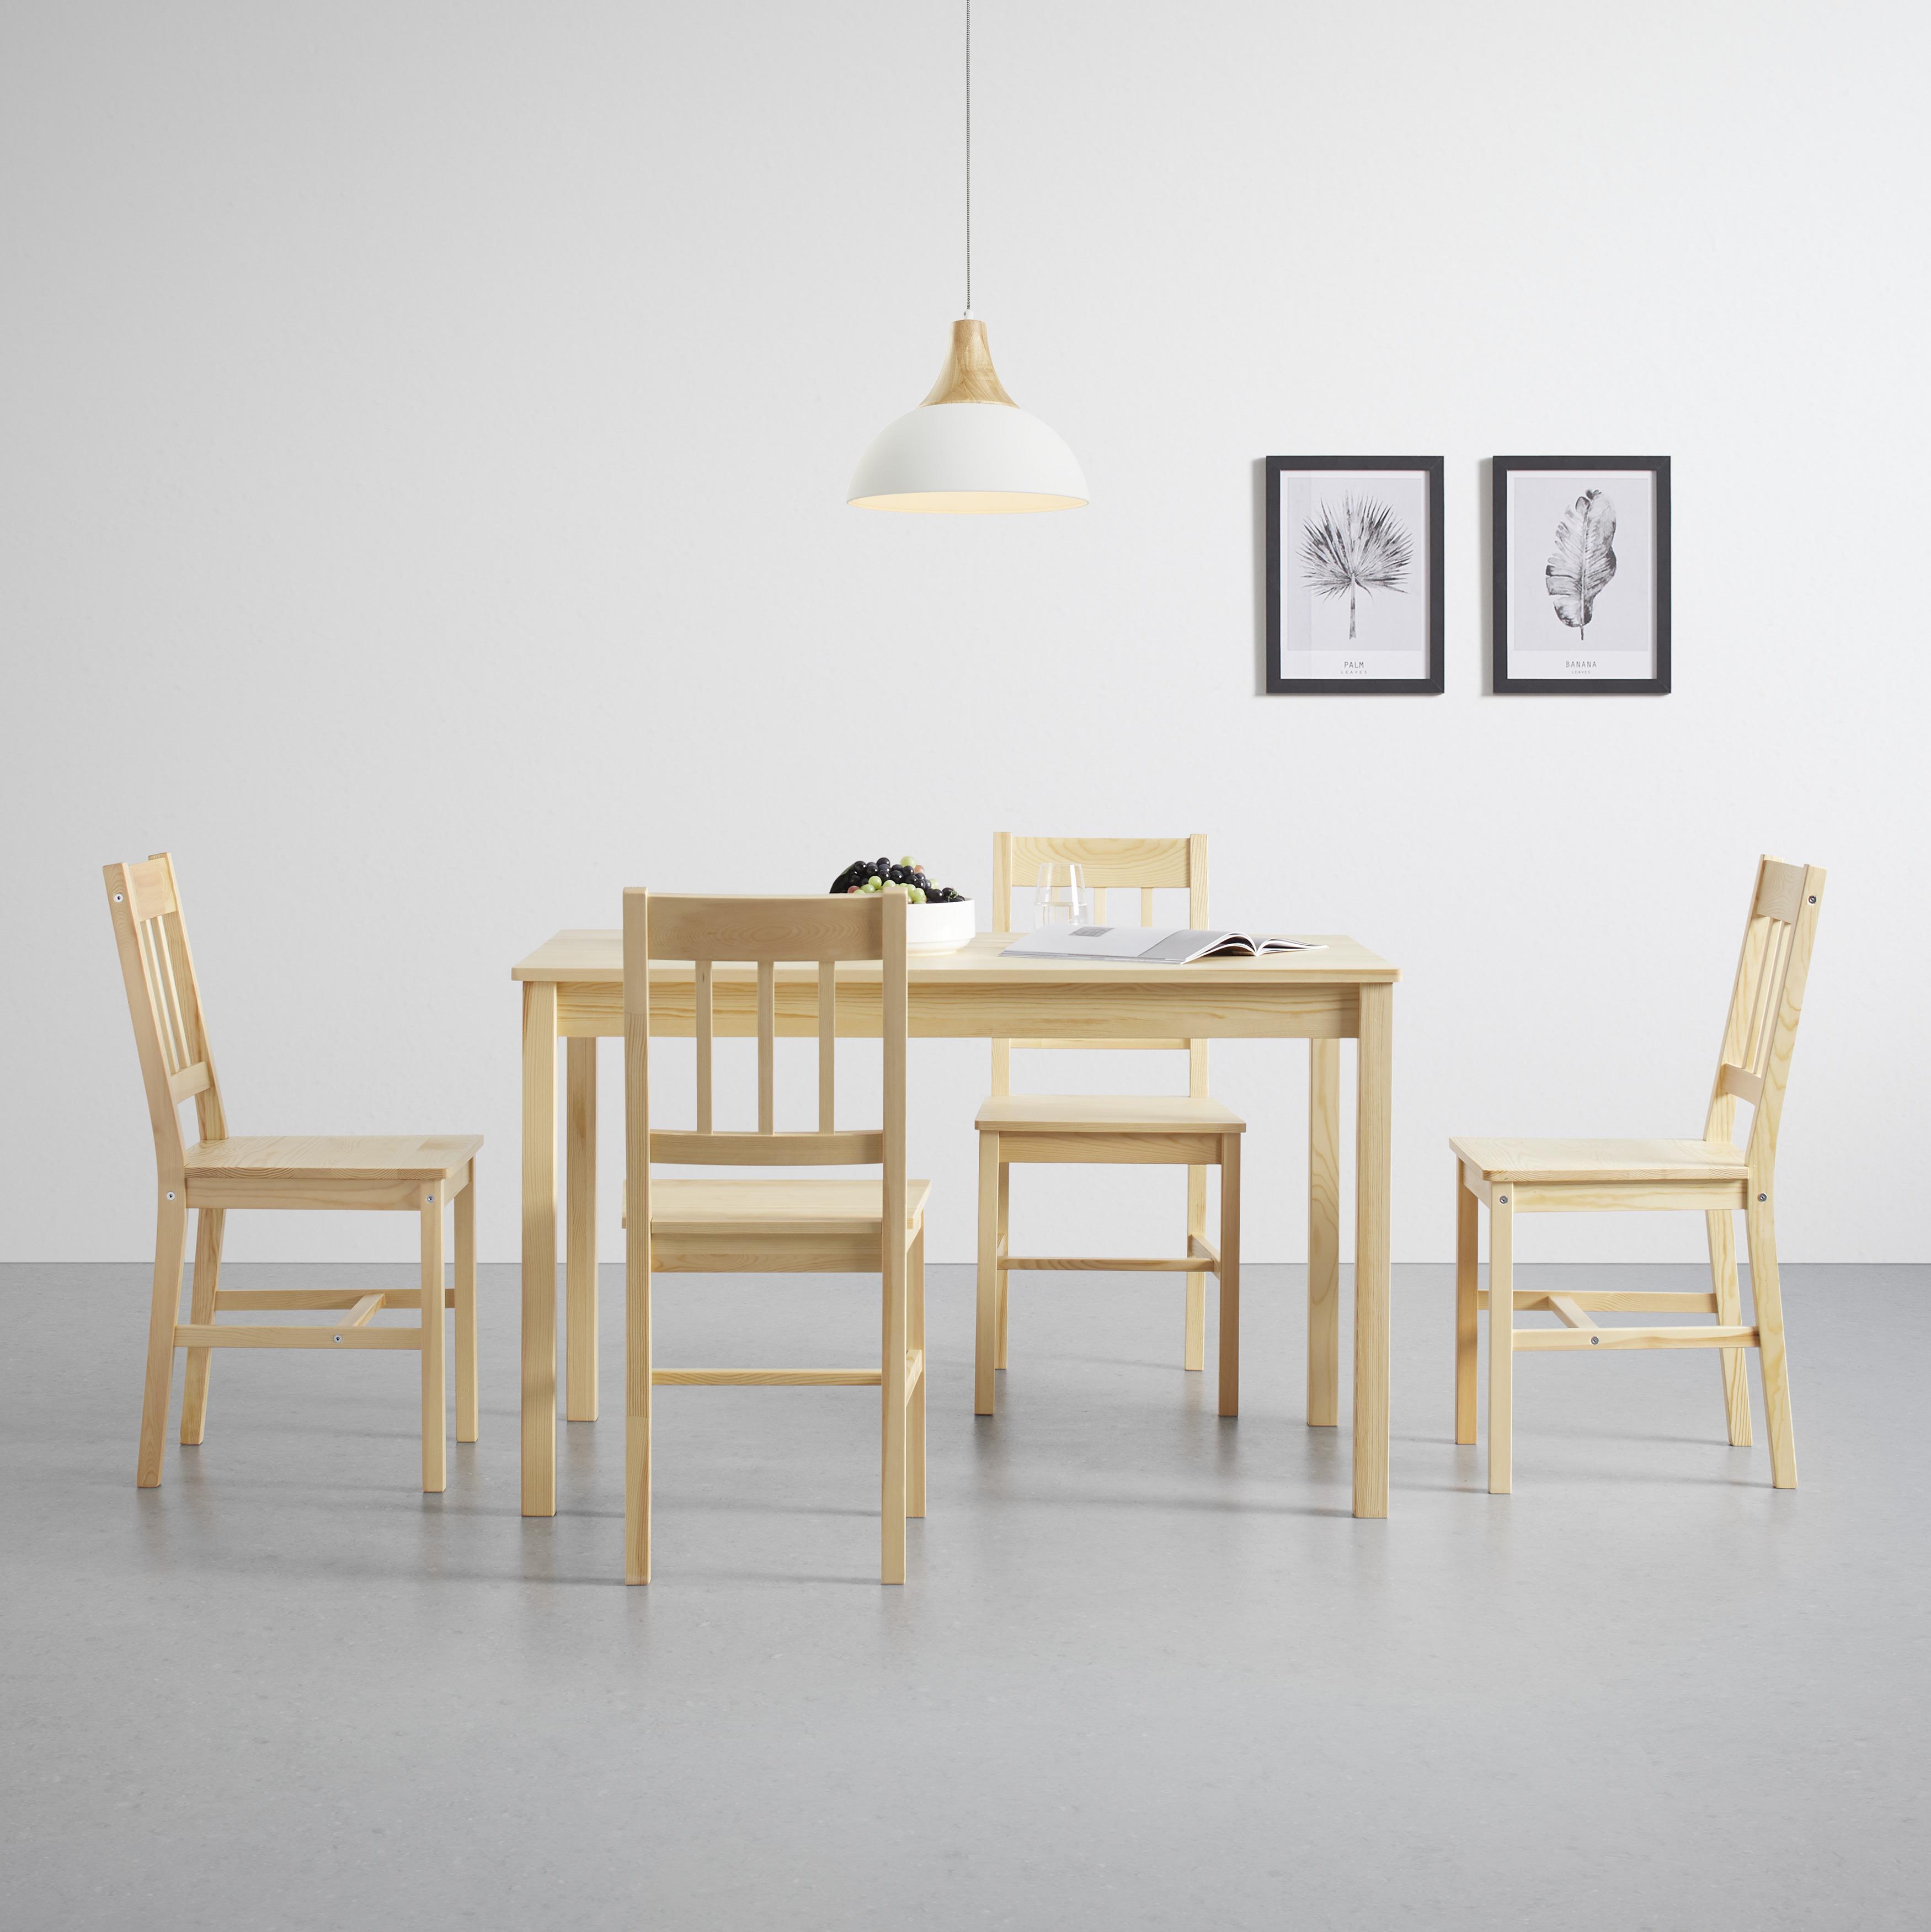 Sitzgruppe Massivholz "Amira", ca. 118x43 cm, aus Kiefer - Naturfarben, MODERN, Holz (118/43/75/40.5/73/86cm) - Bessagi Home